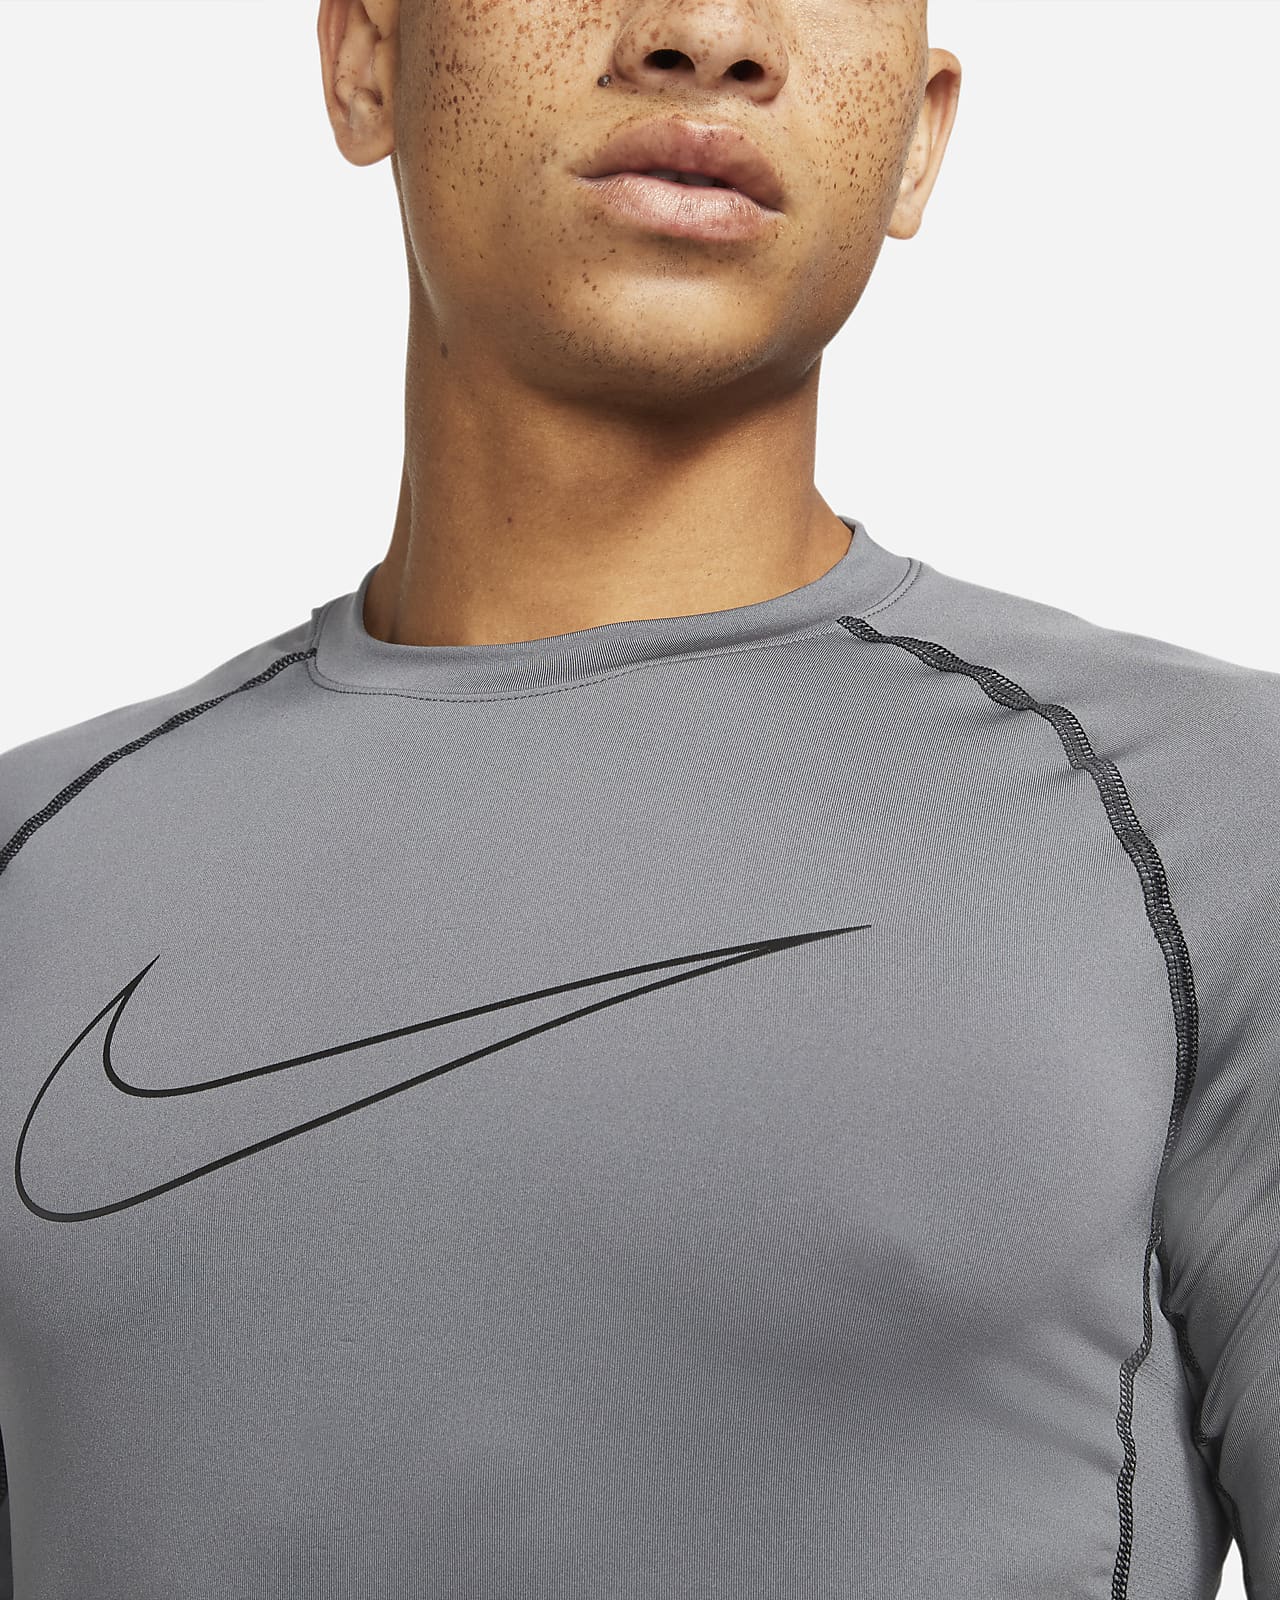 douche Stevig Afhankelijk Nike Pro Dri-FIT Men's Slim Fit Short-Sleeve Top. Nike.com